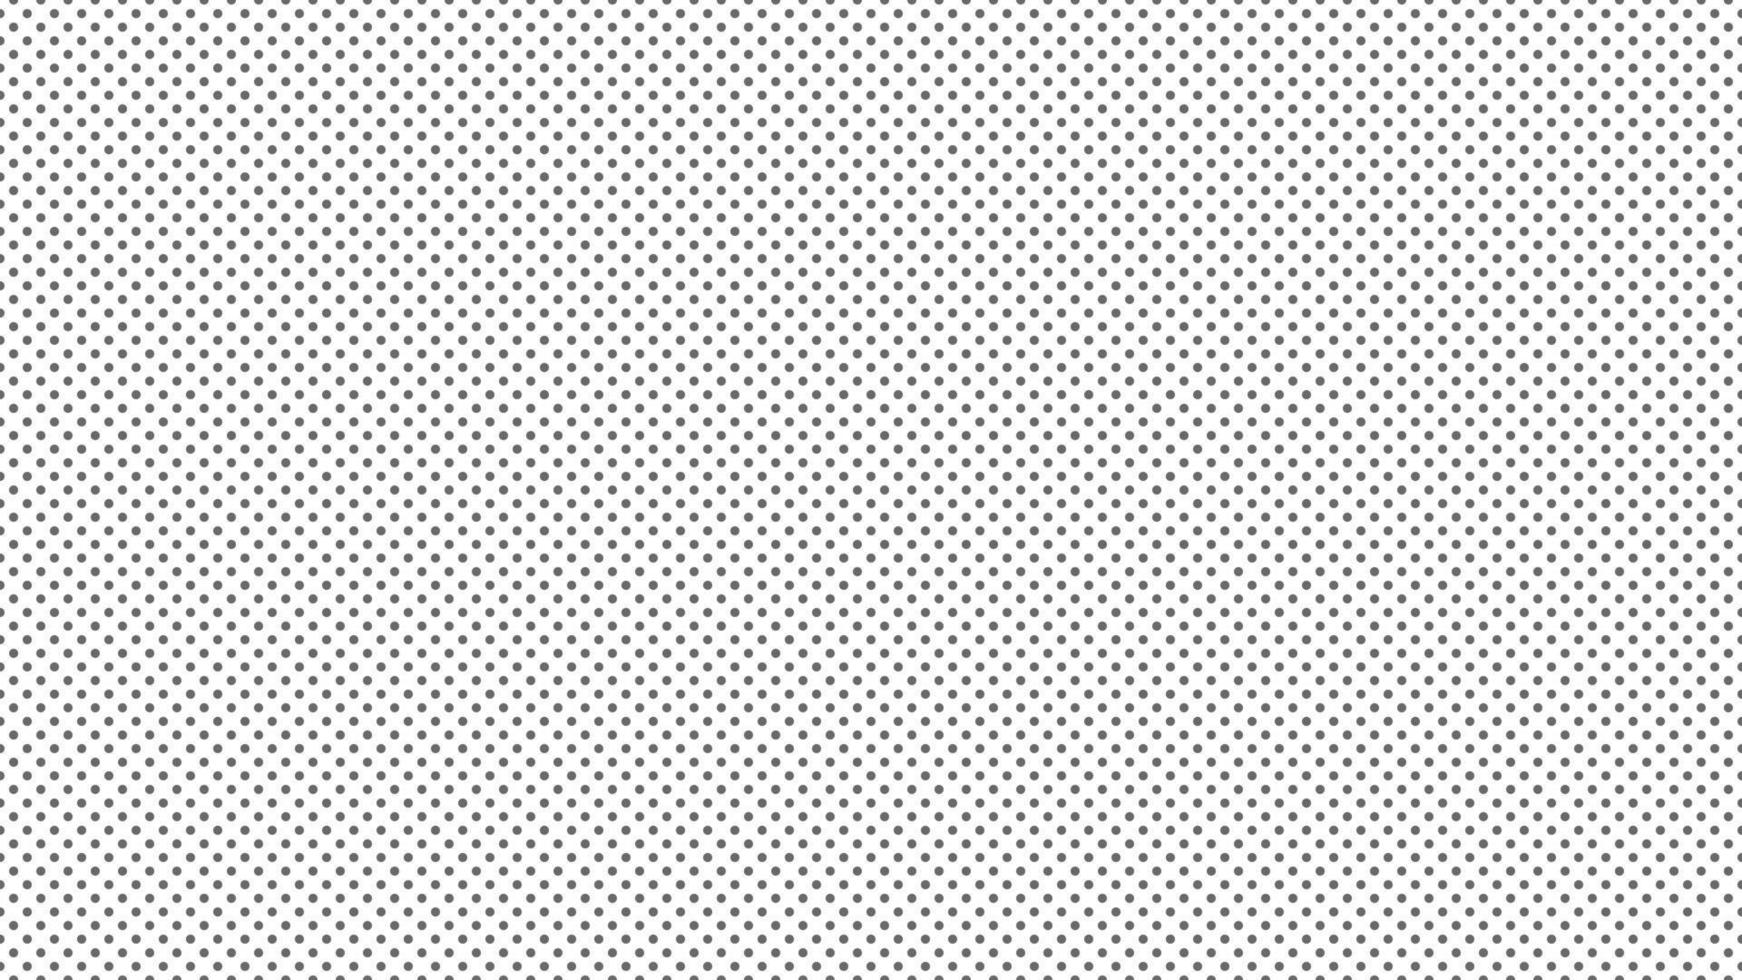 dim gray color polka dots background vector